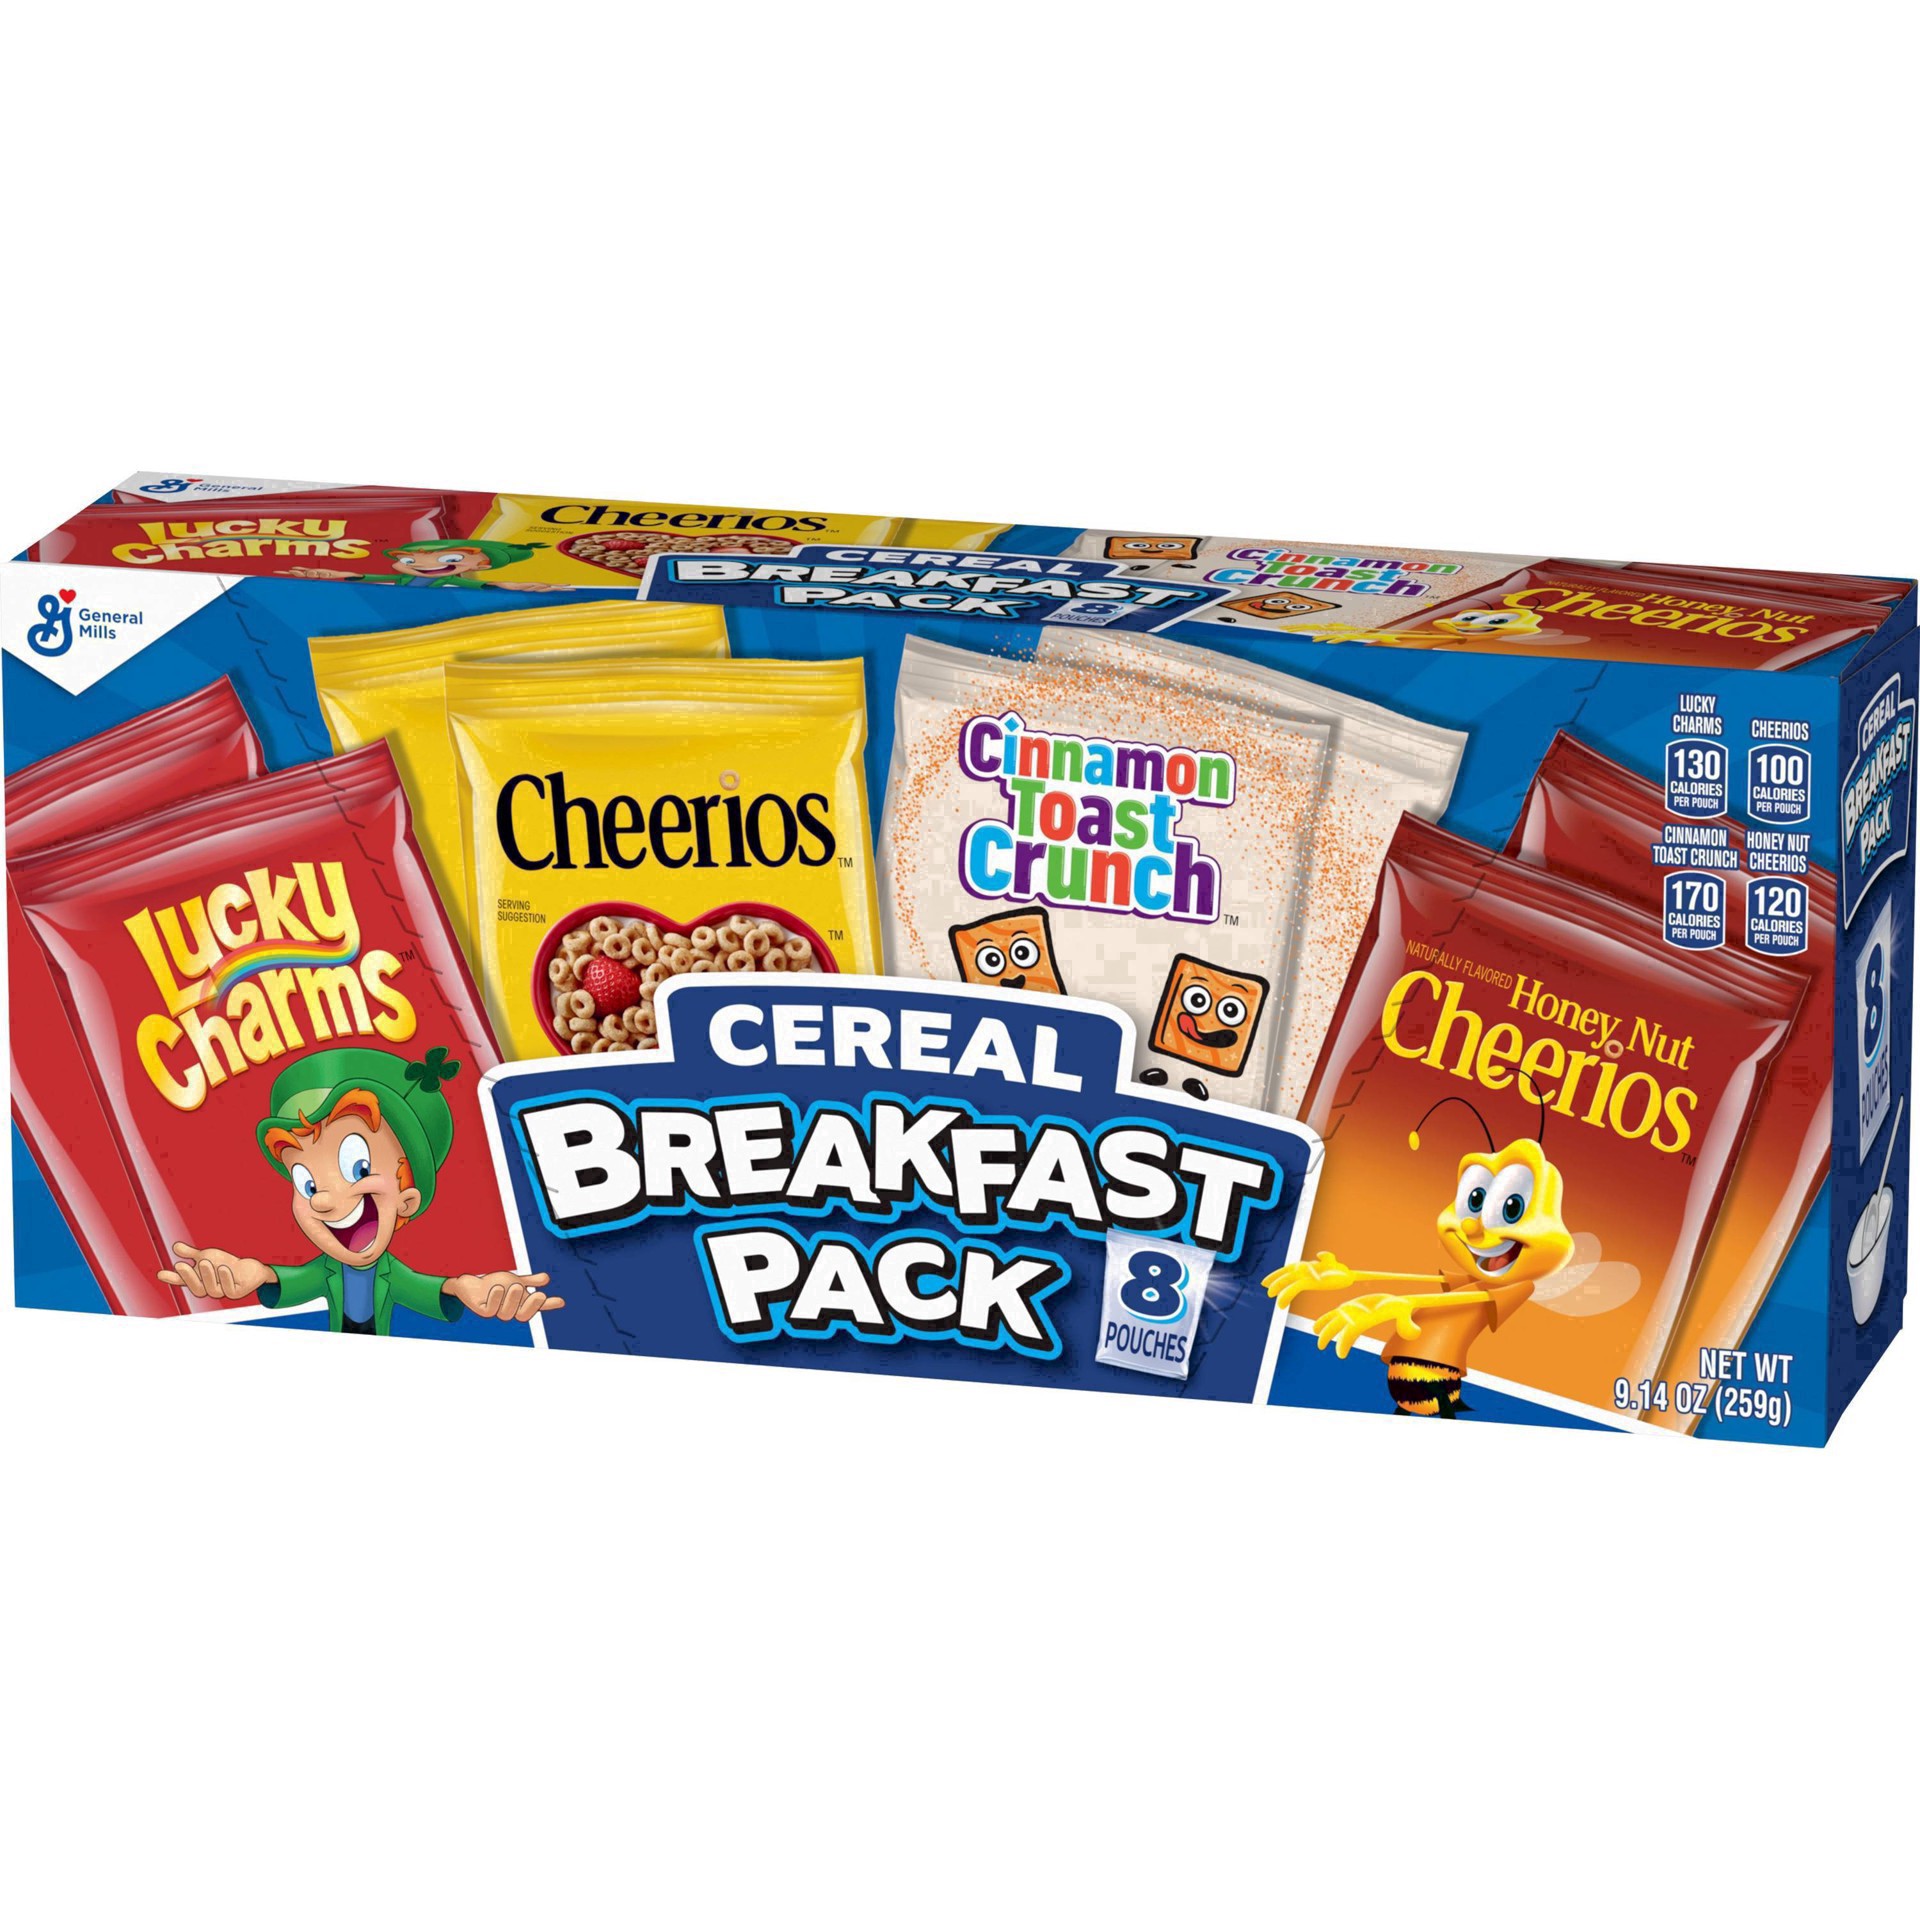 slide 36 of 141, General Mills Breakfast Pack Cereal, 8 ct